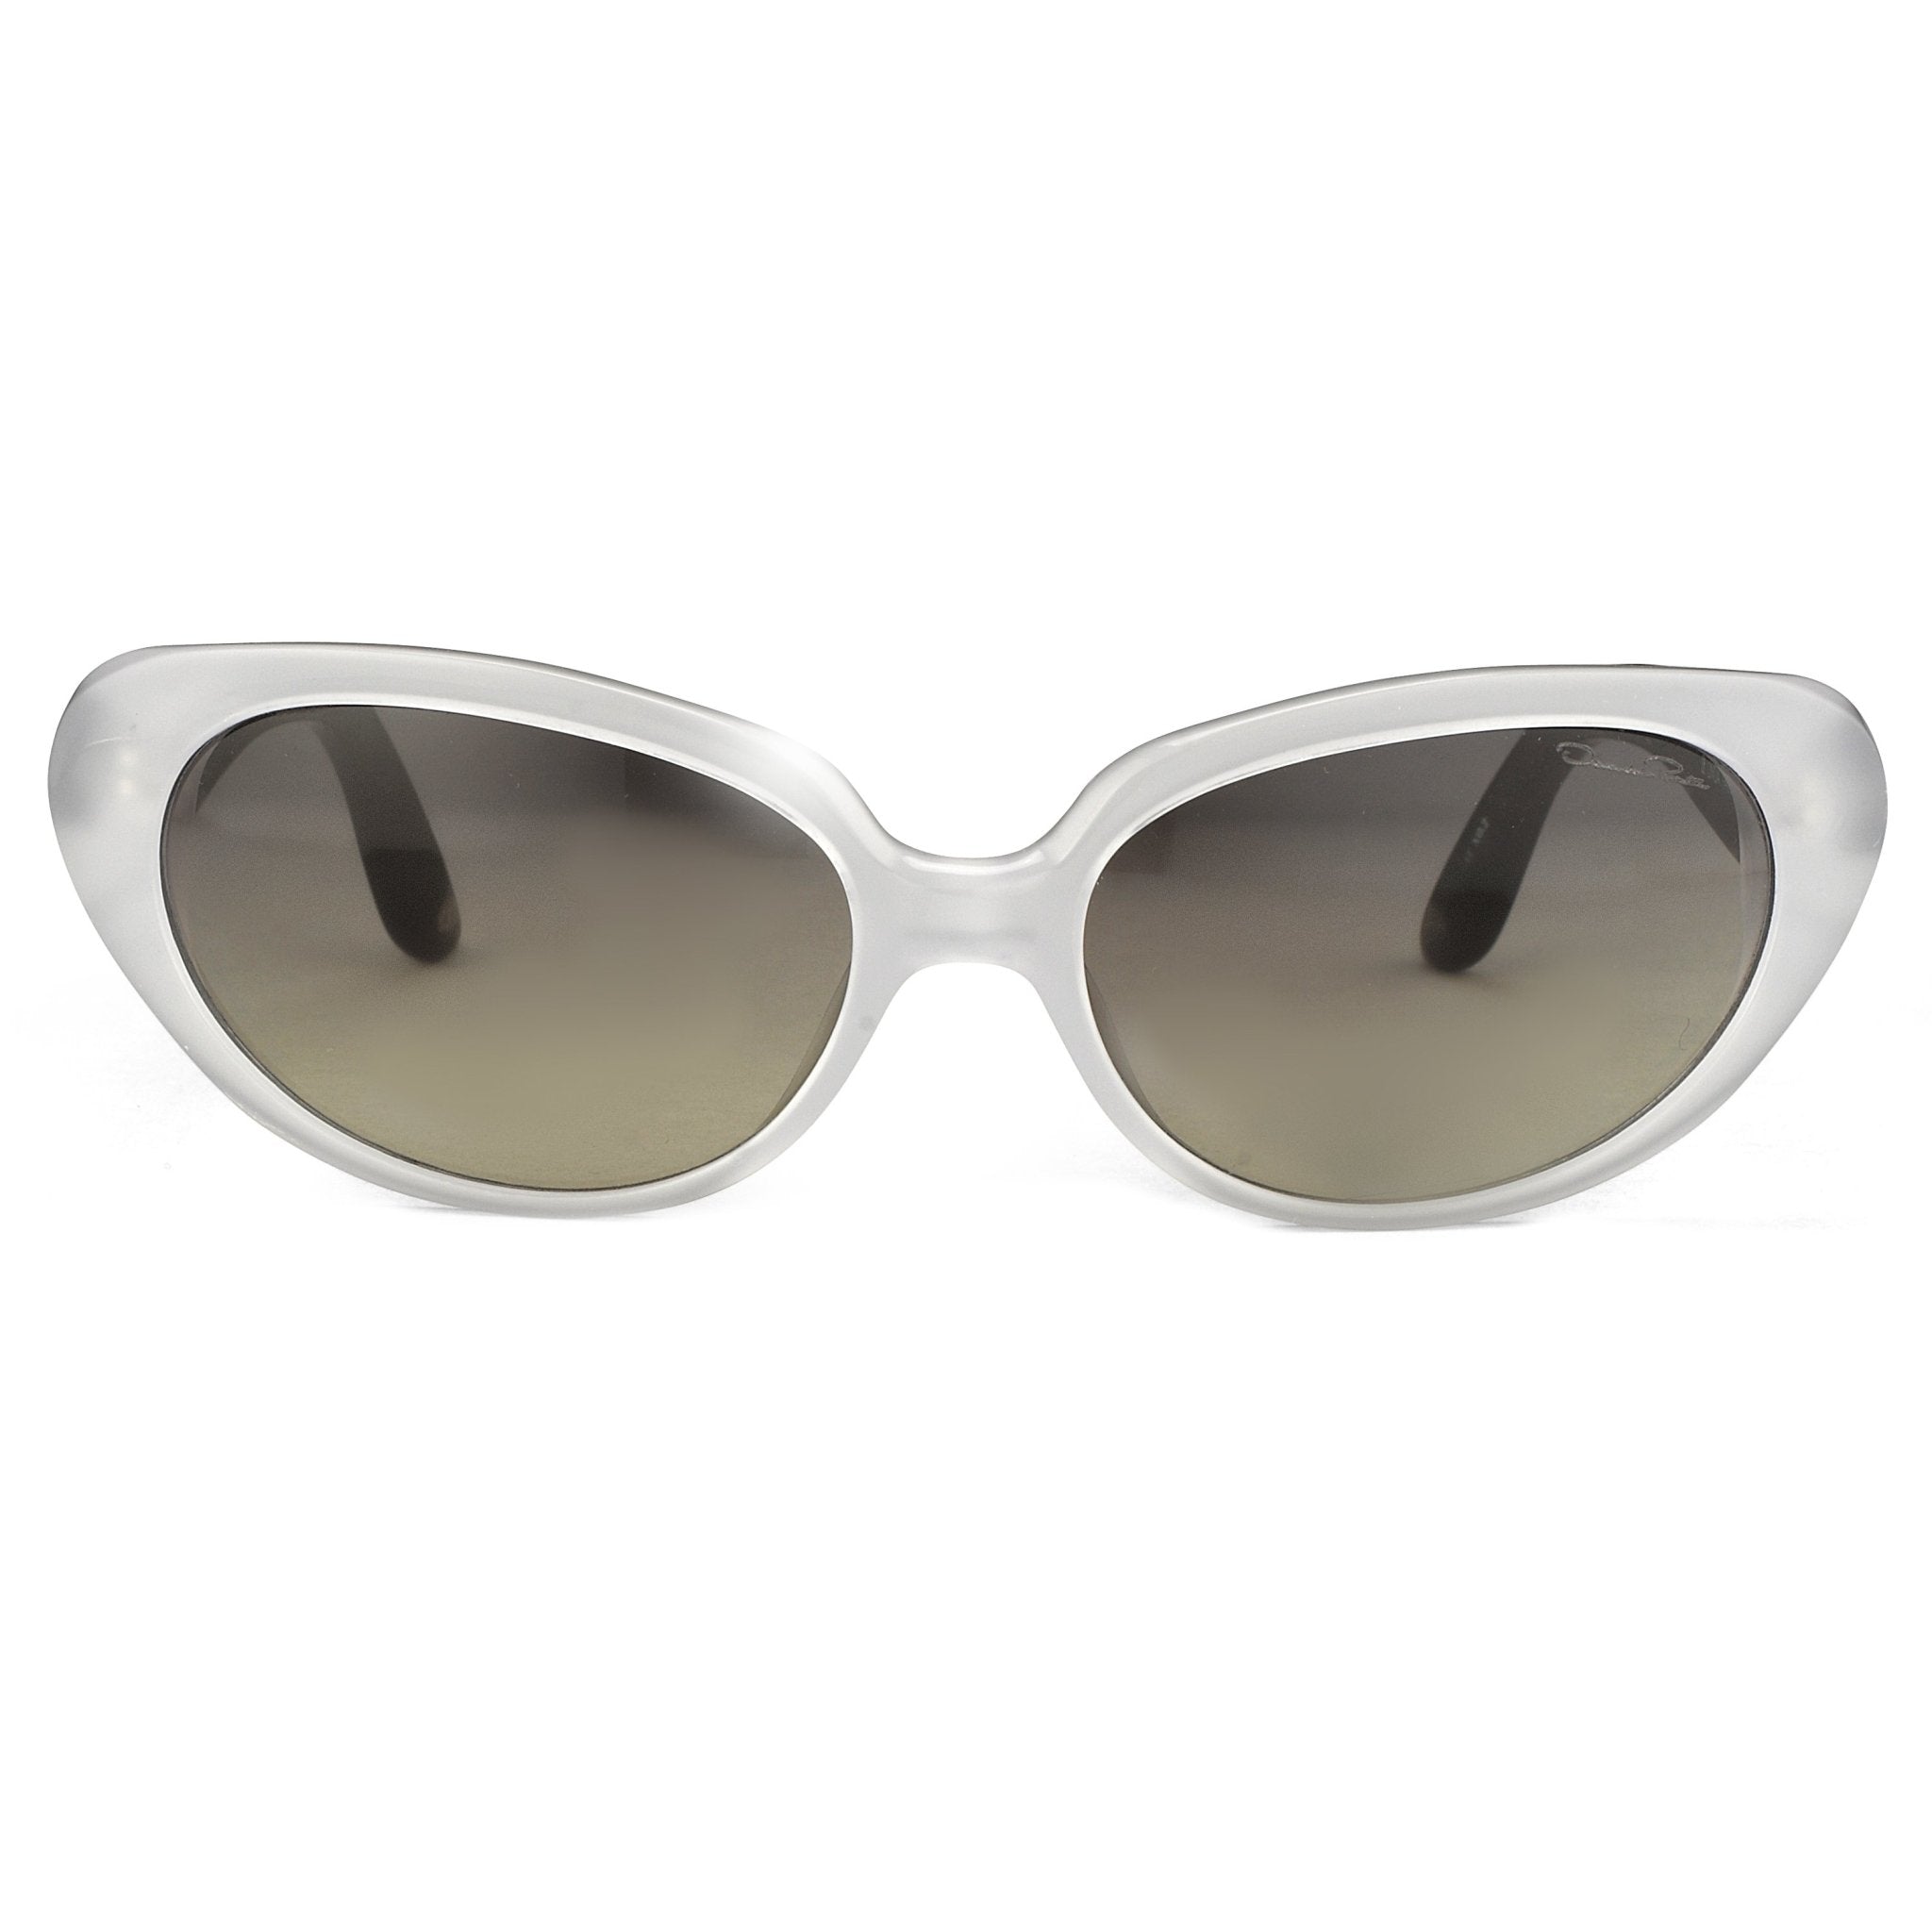 Oscar De La Renta Women Sunglasses Sandalwood Oval Ivory and Grey Lenses - ODLR43C8SUN - Watches & Crystals